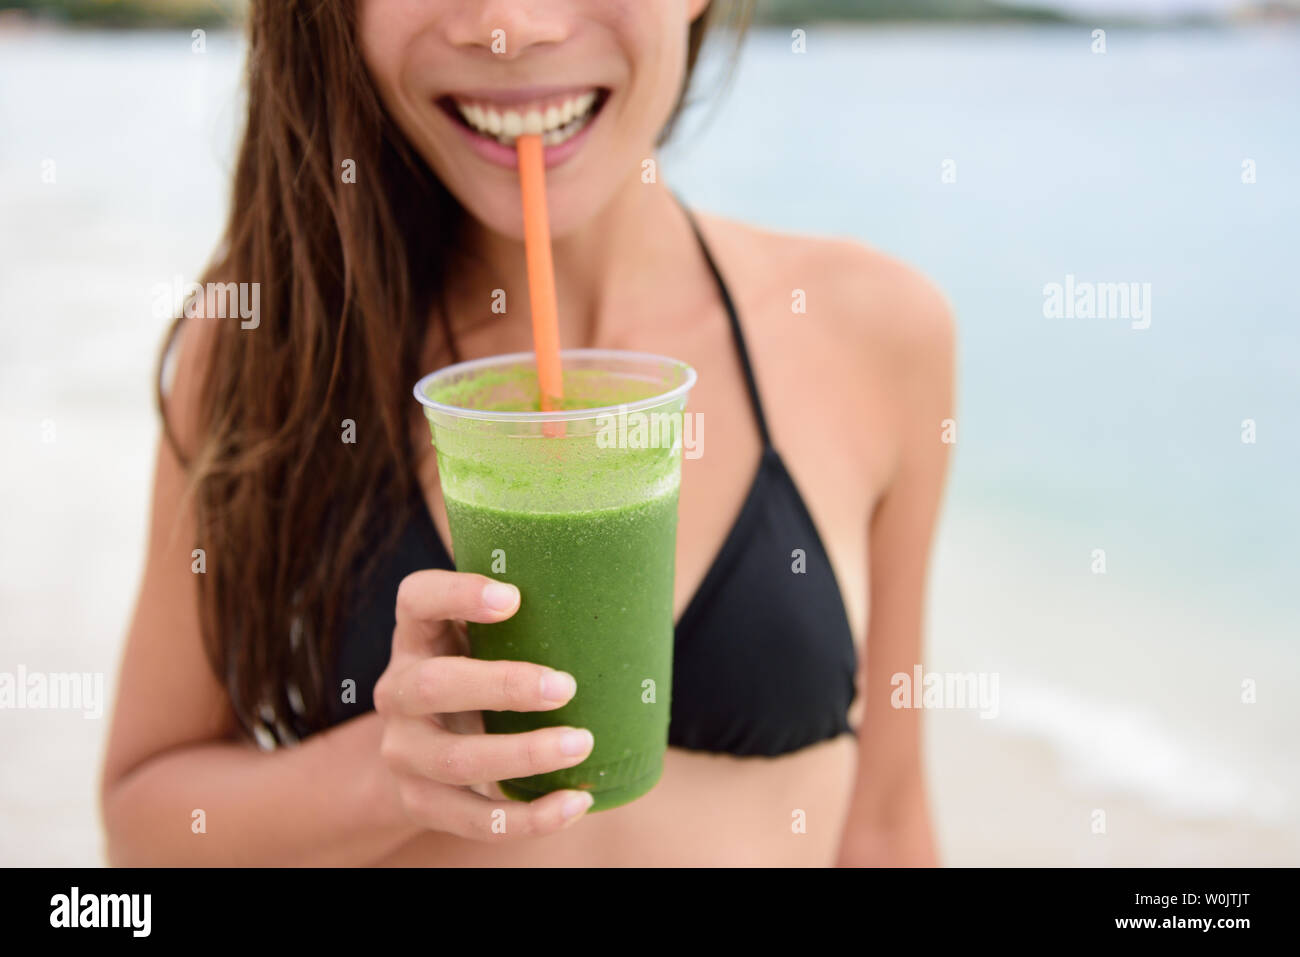 Green Bikini High Resolution Stock Photography and Images - Alamy